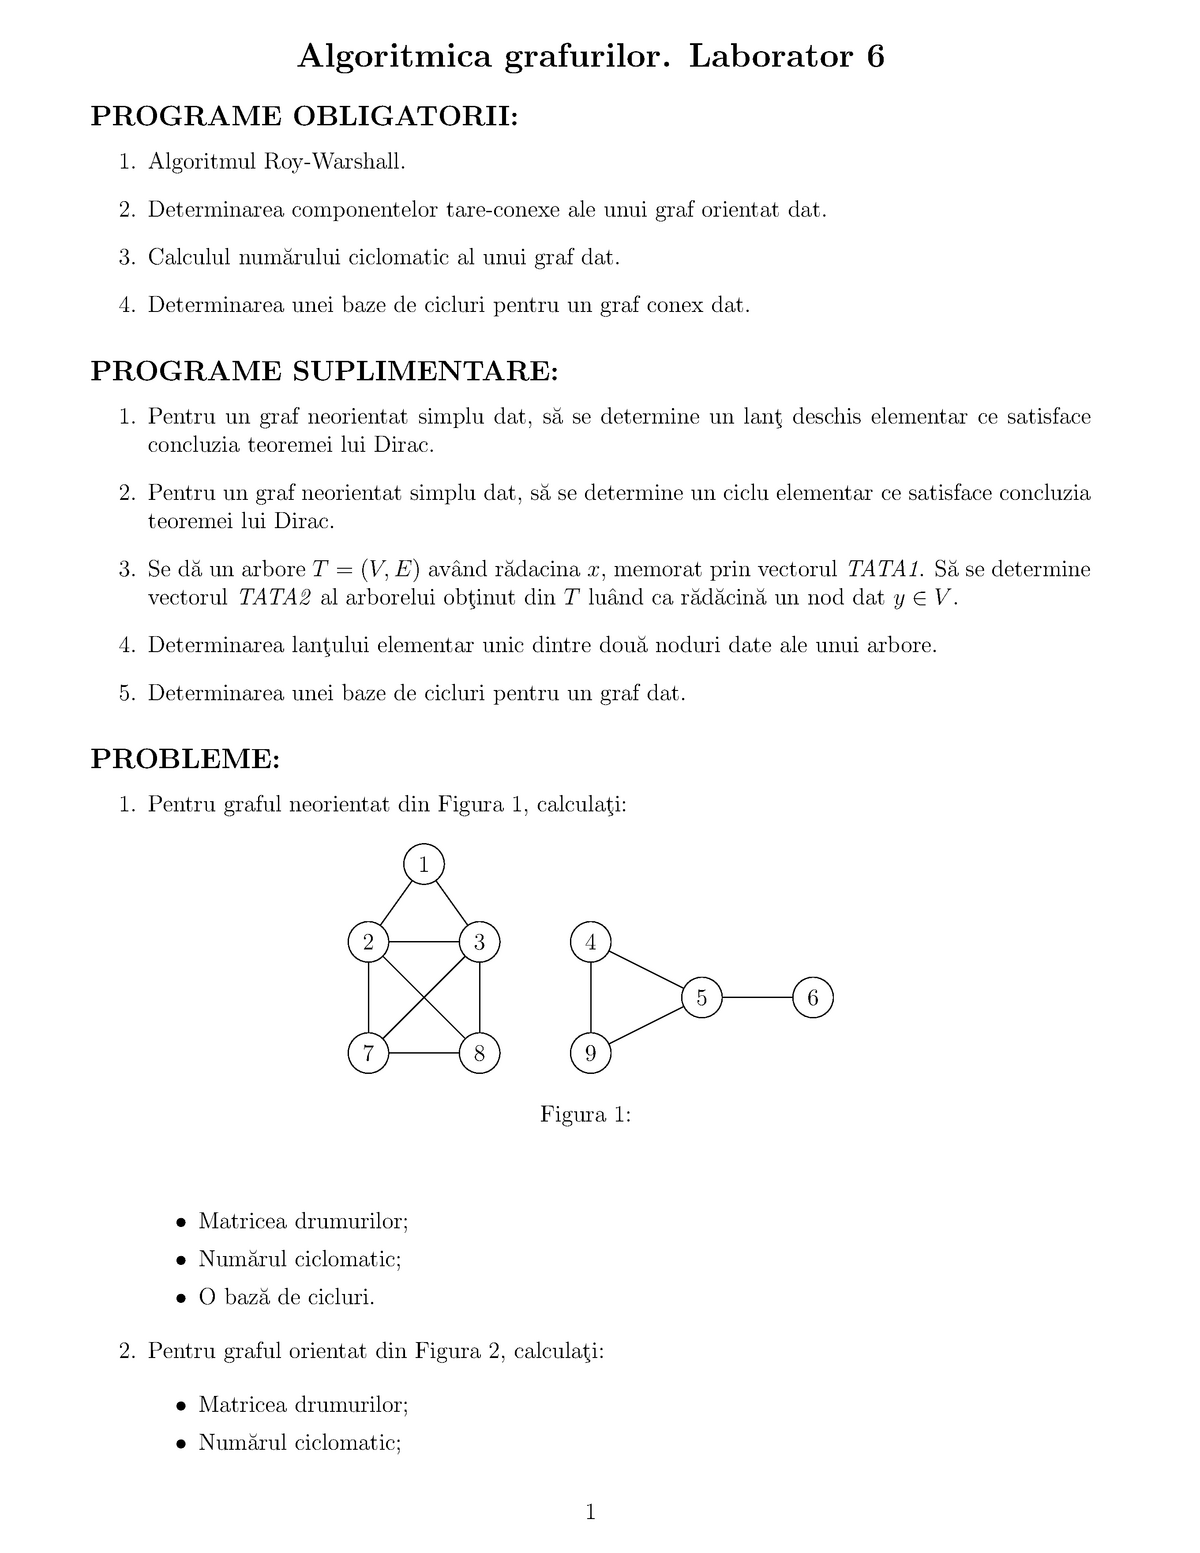 platform Vandalize Interpretation ALG GRAF Laborator 6 - Algoritmica grafurilor. Laborator 6 PROGRAME  OBLIGATORII: Algoritmul - Studocu